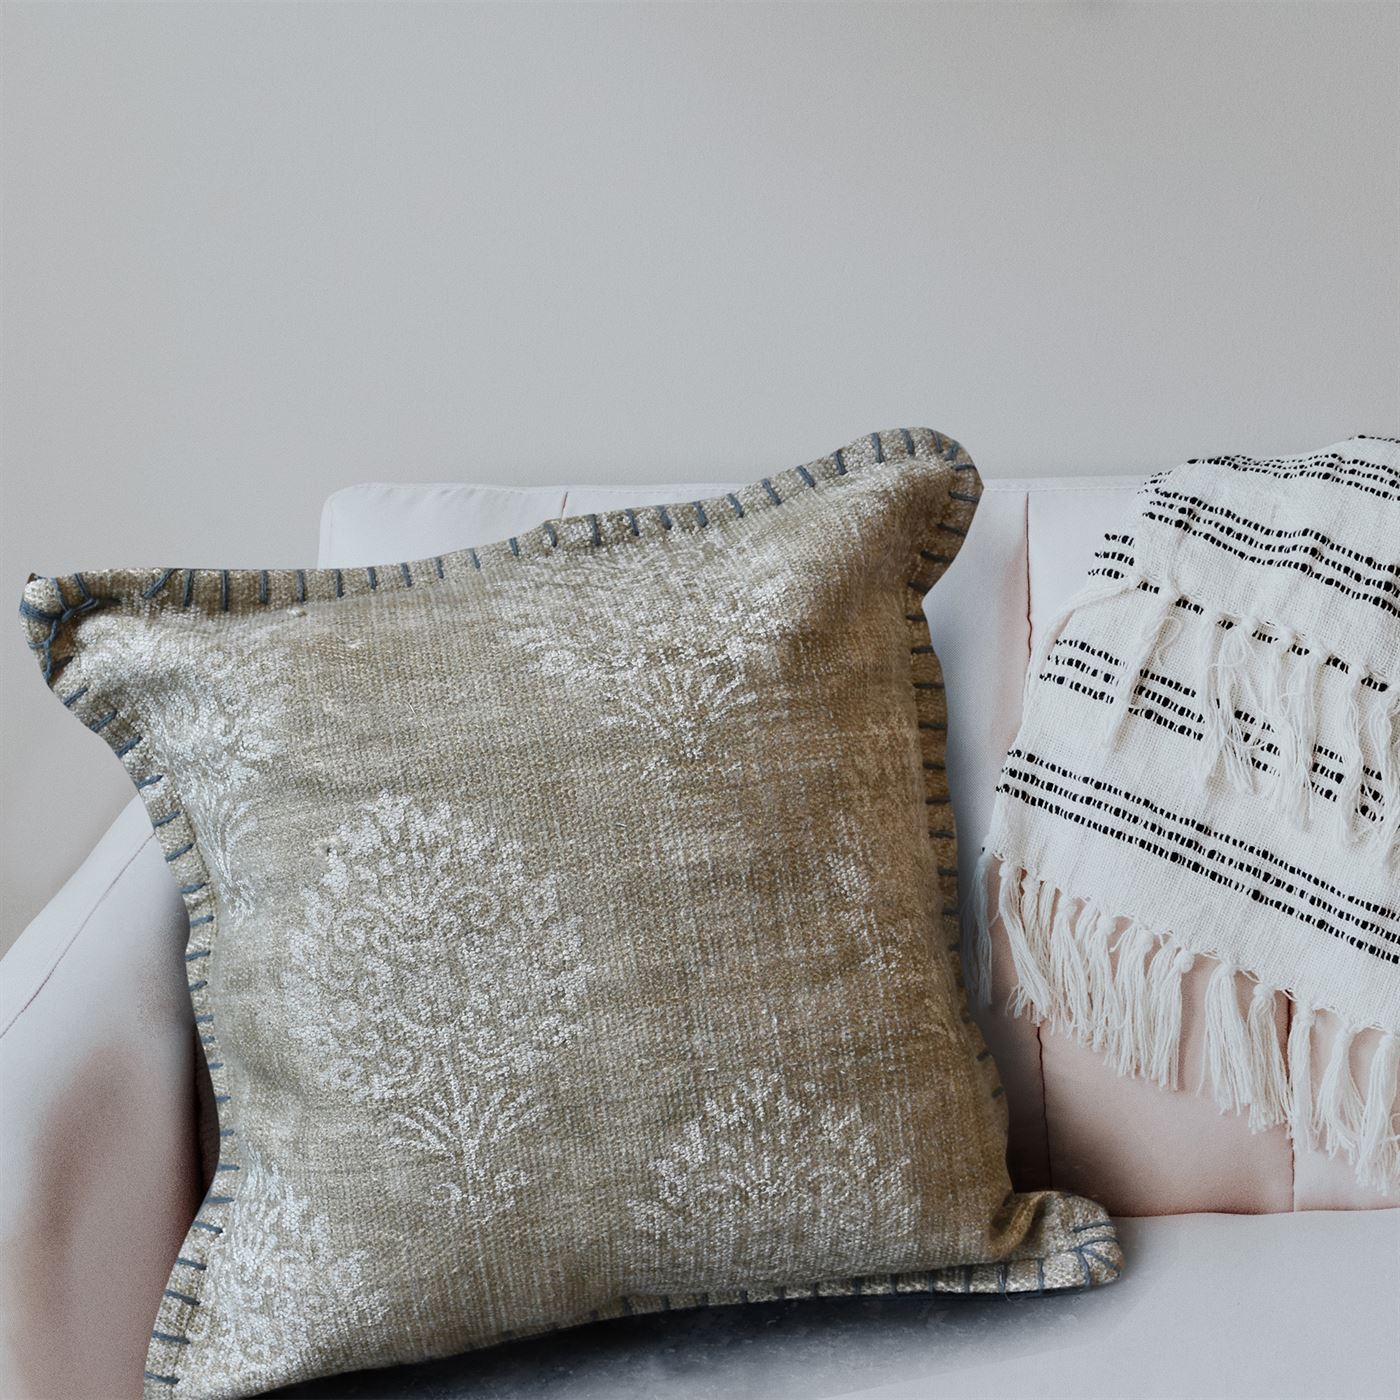 Temmin Pillow, Cotton, Printed, Khaki, Pitloom, Flat Weave